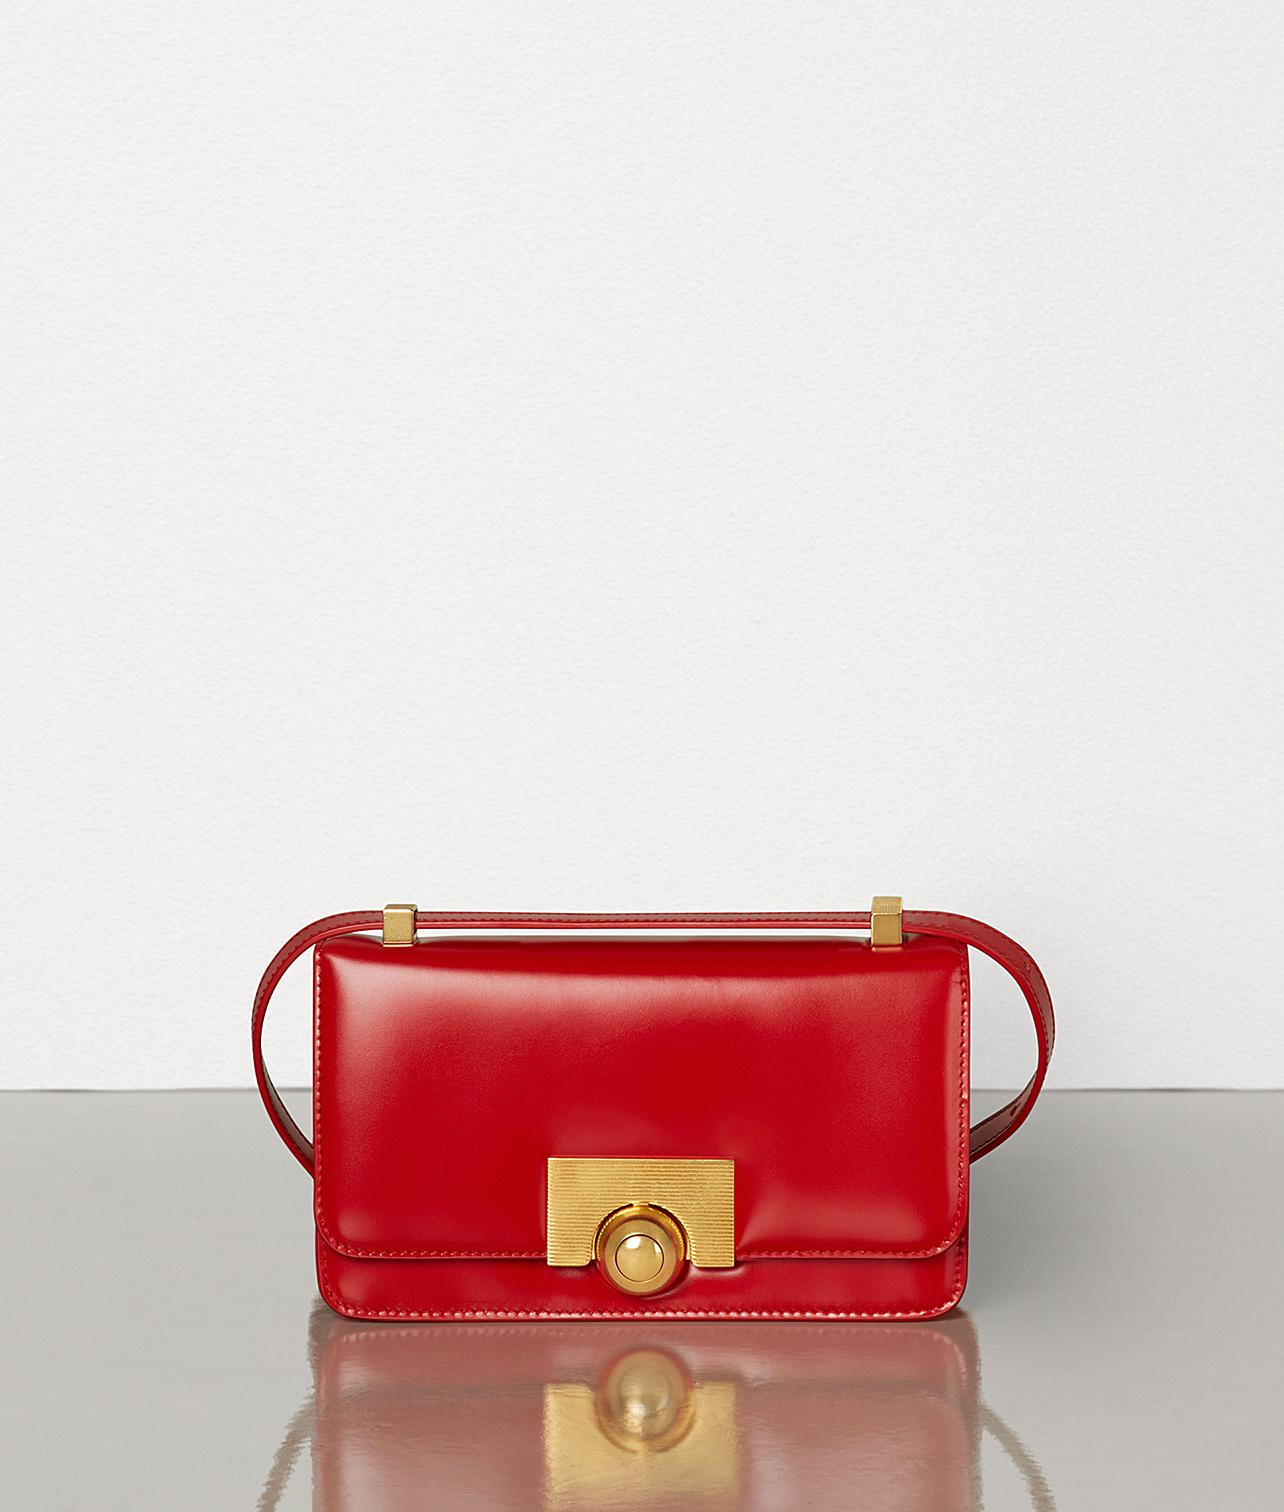 Bottega Veneta Leather The Mini Classic Bag in Bright Red (Red) - Lyst